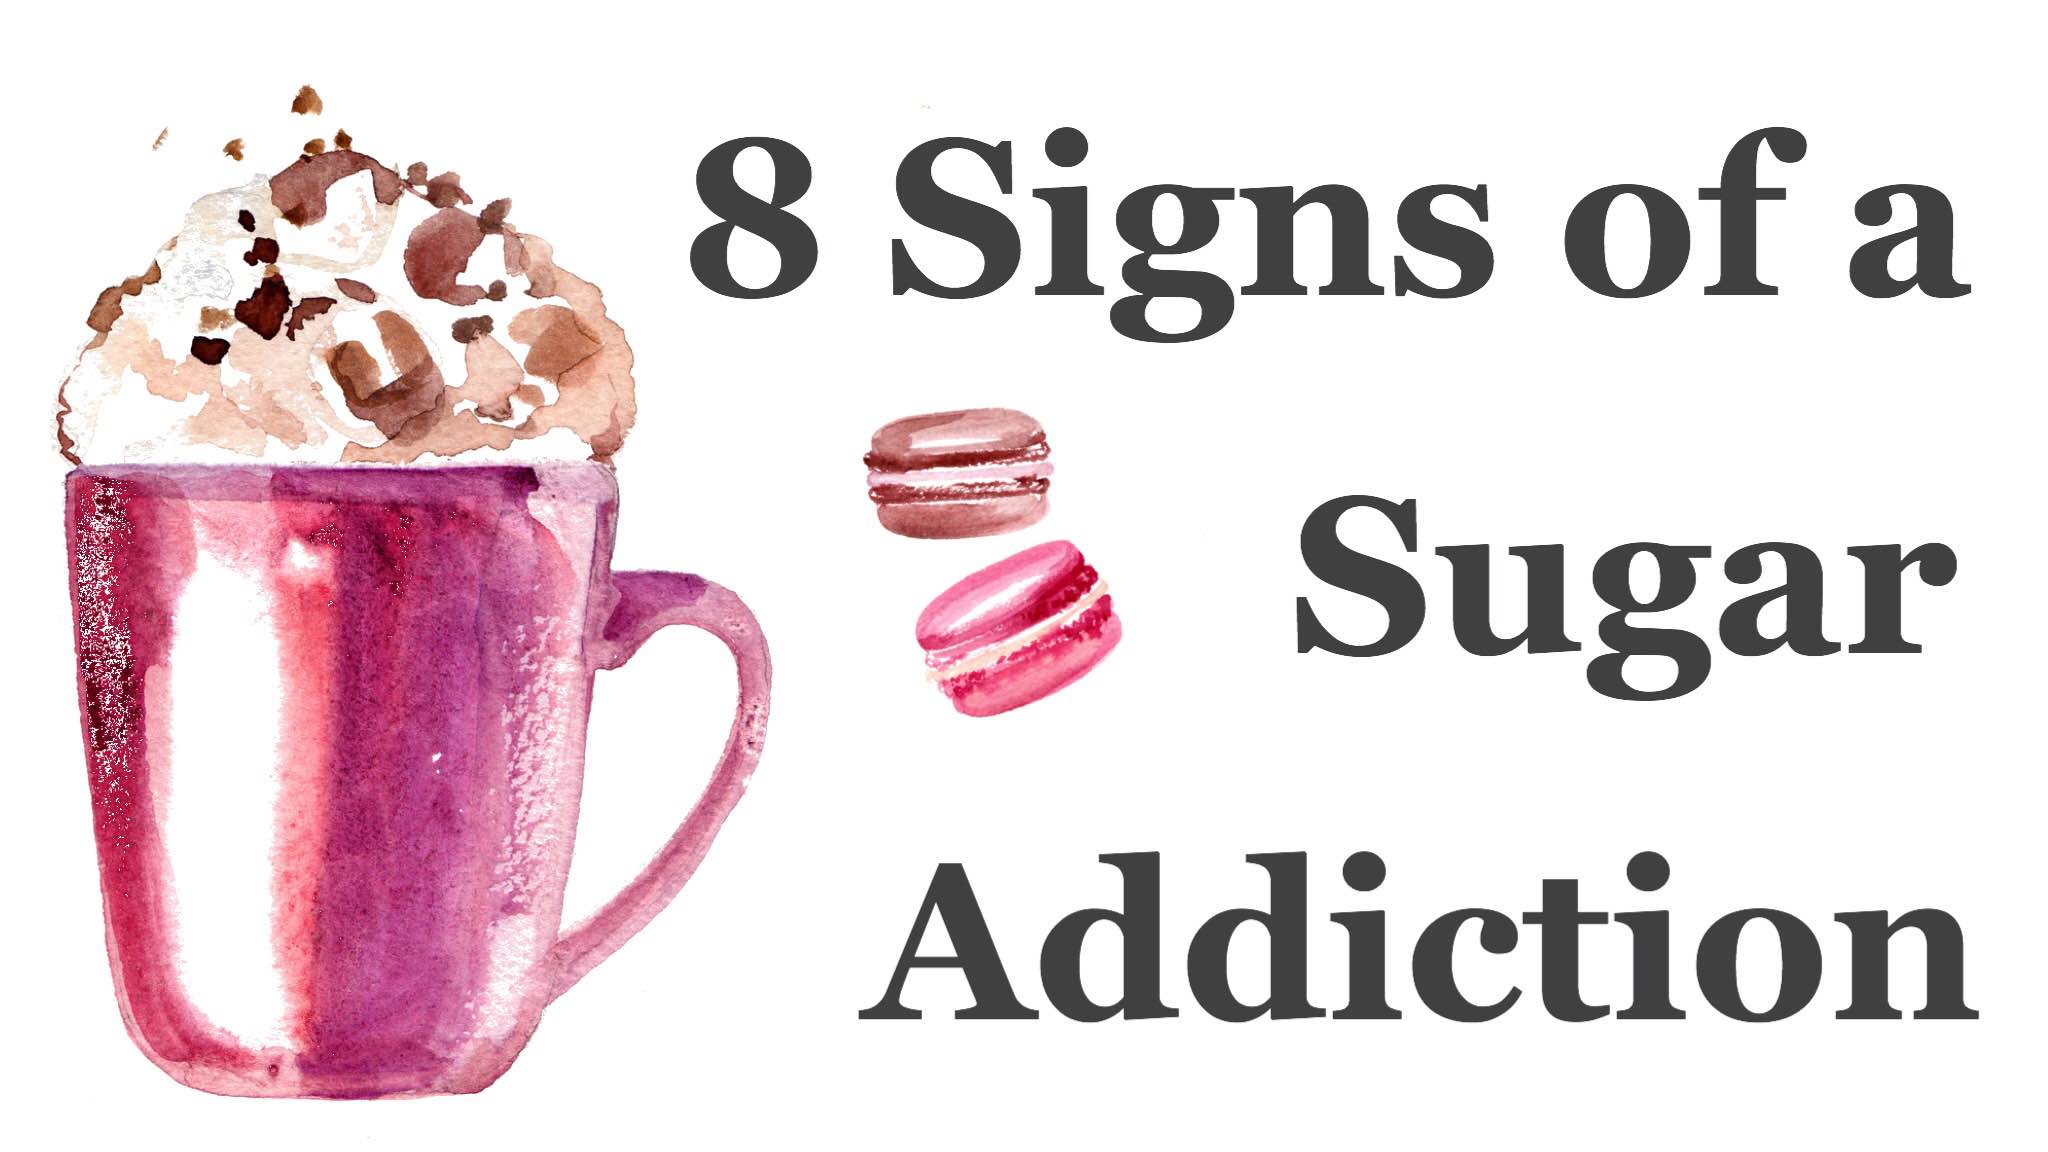 Sugar addiction photo